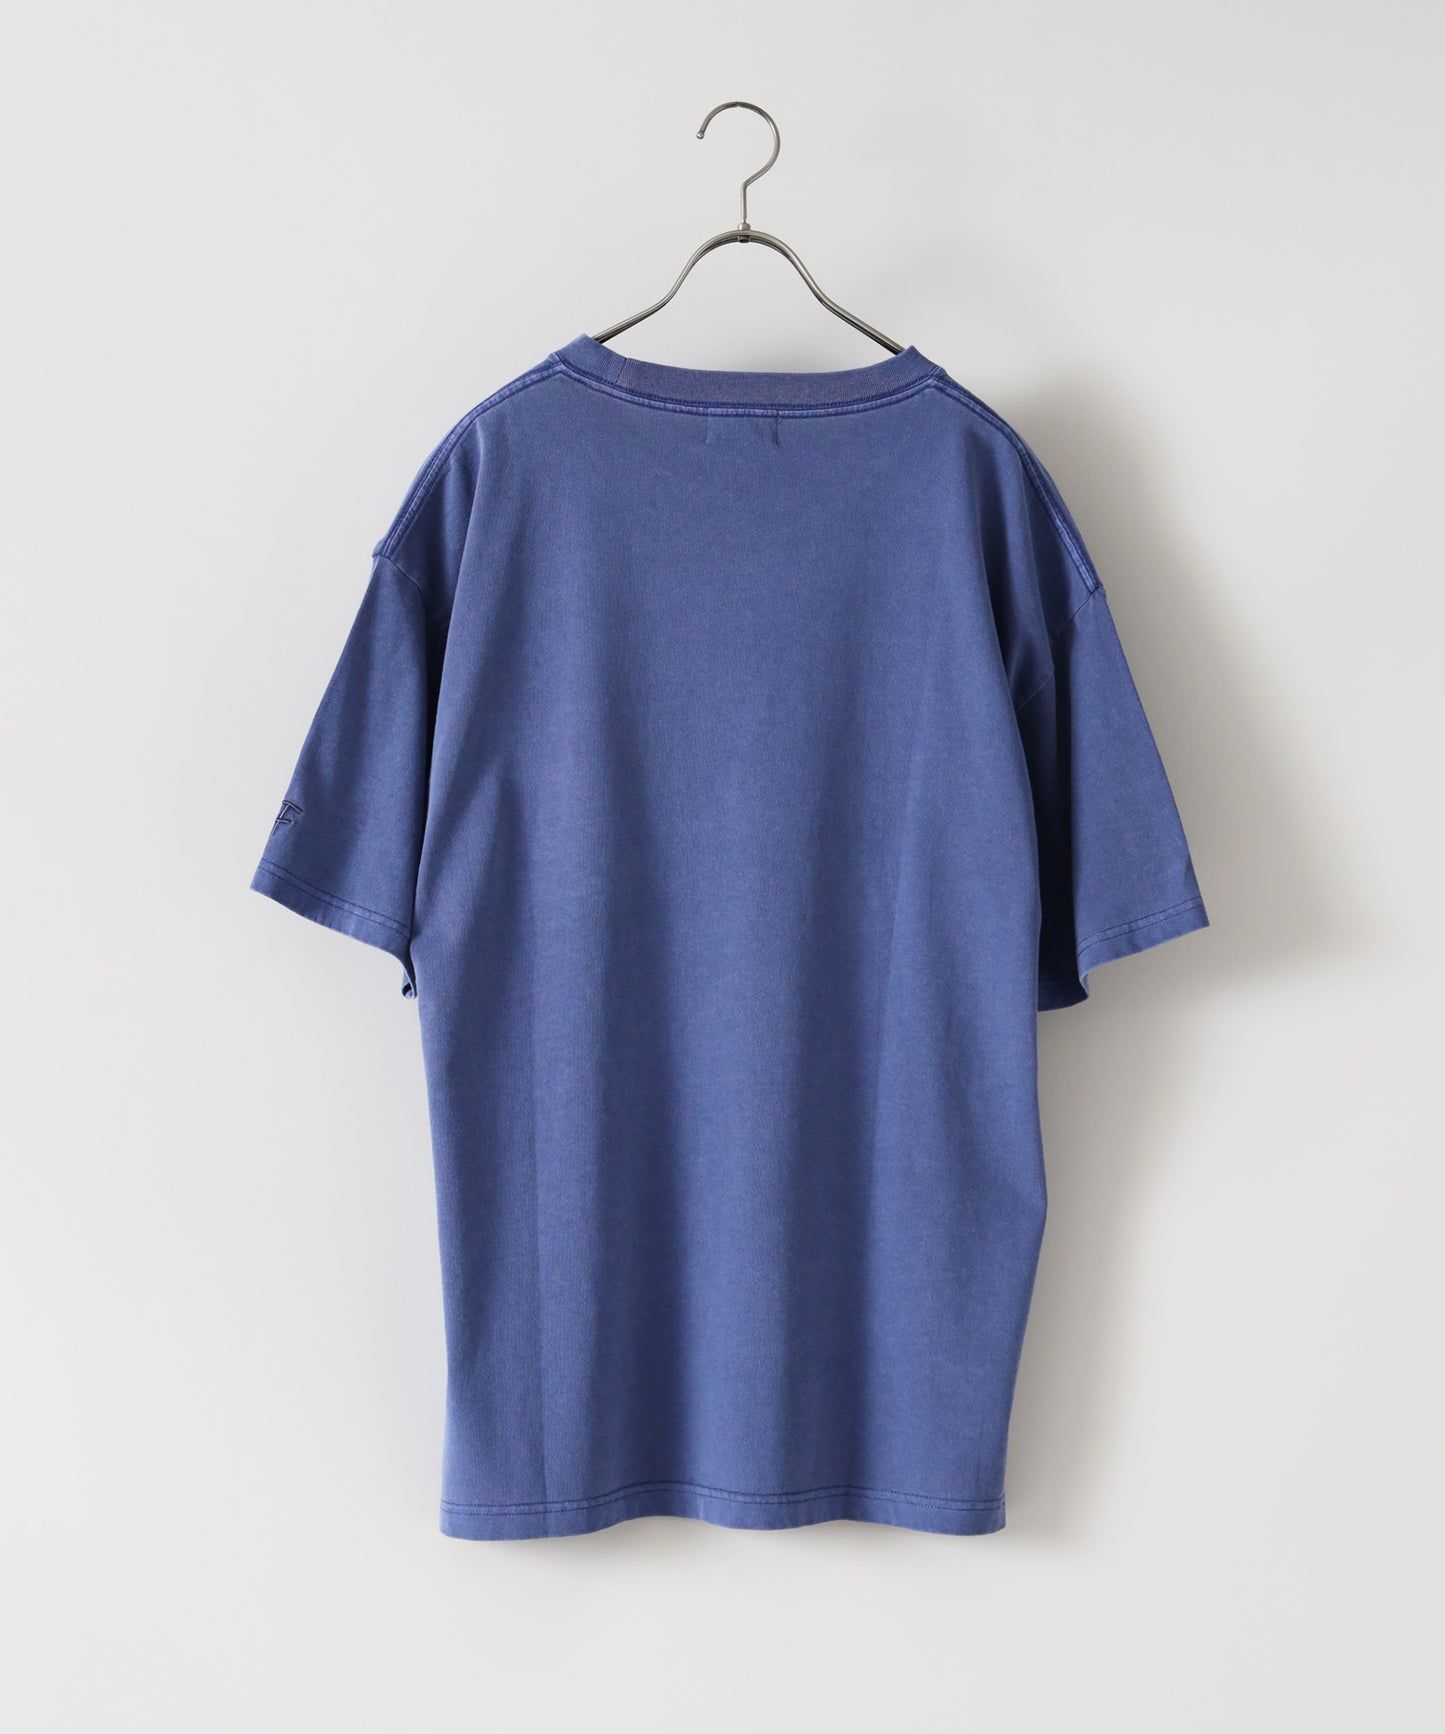 【FFEIN】ヴィンテージライクロゴ刺繍ポケットTシャツ / ブルー